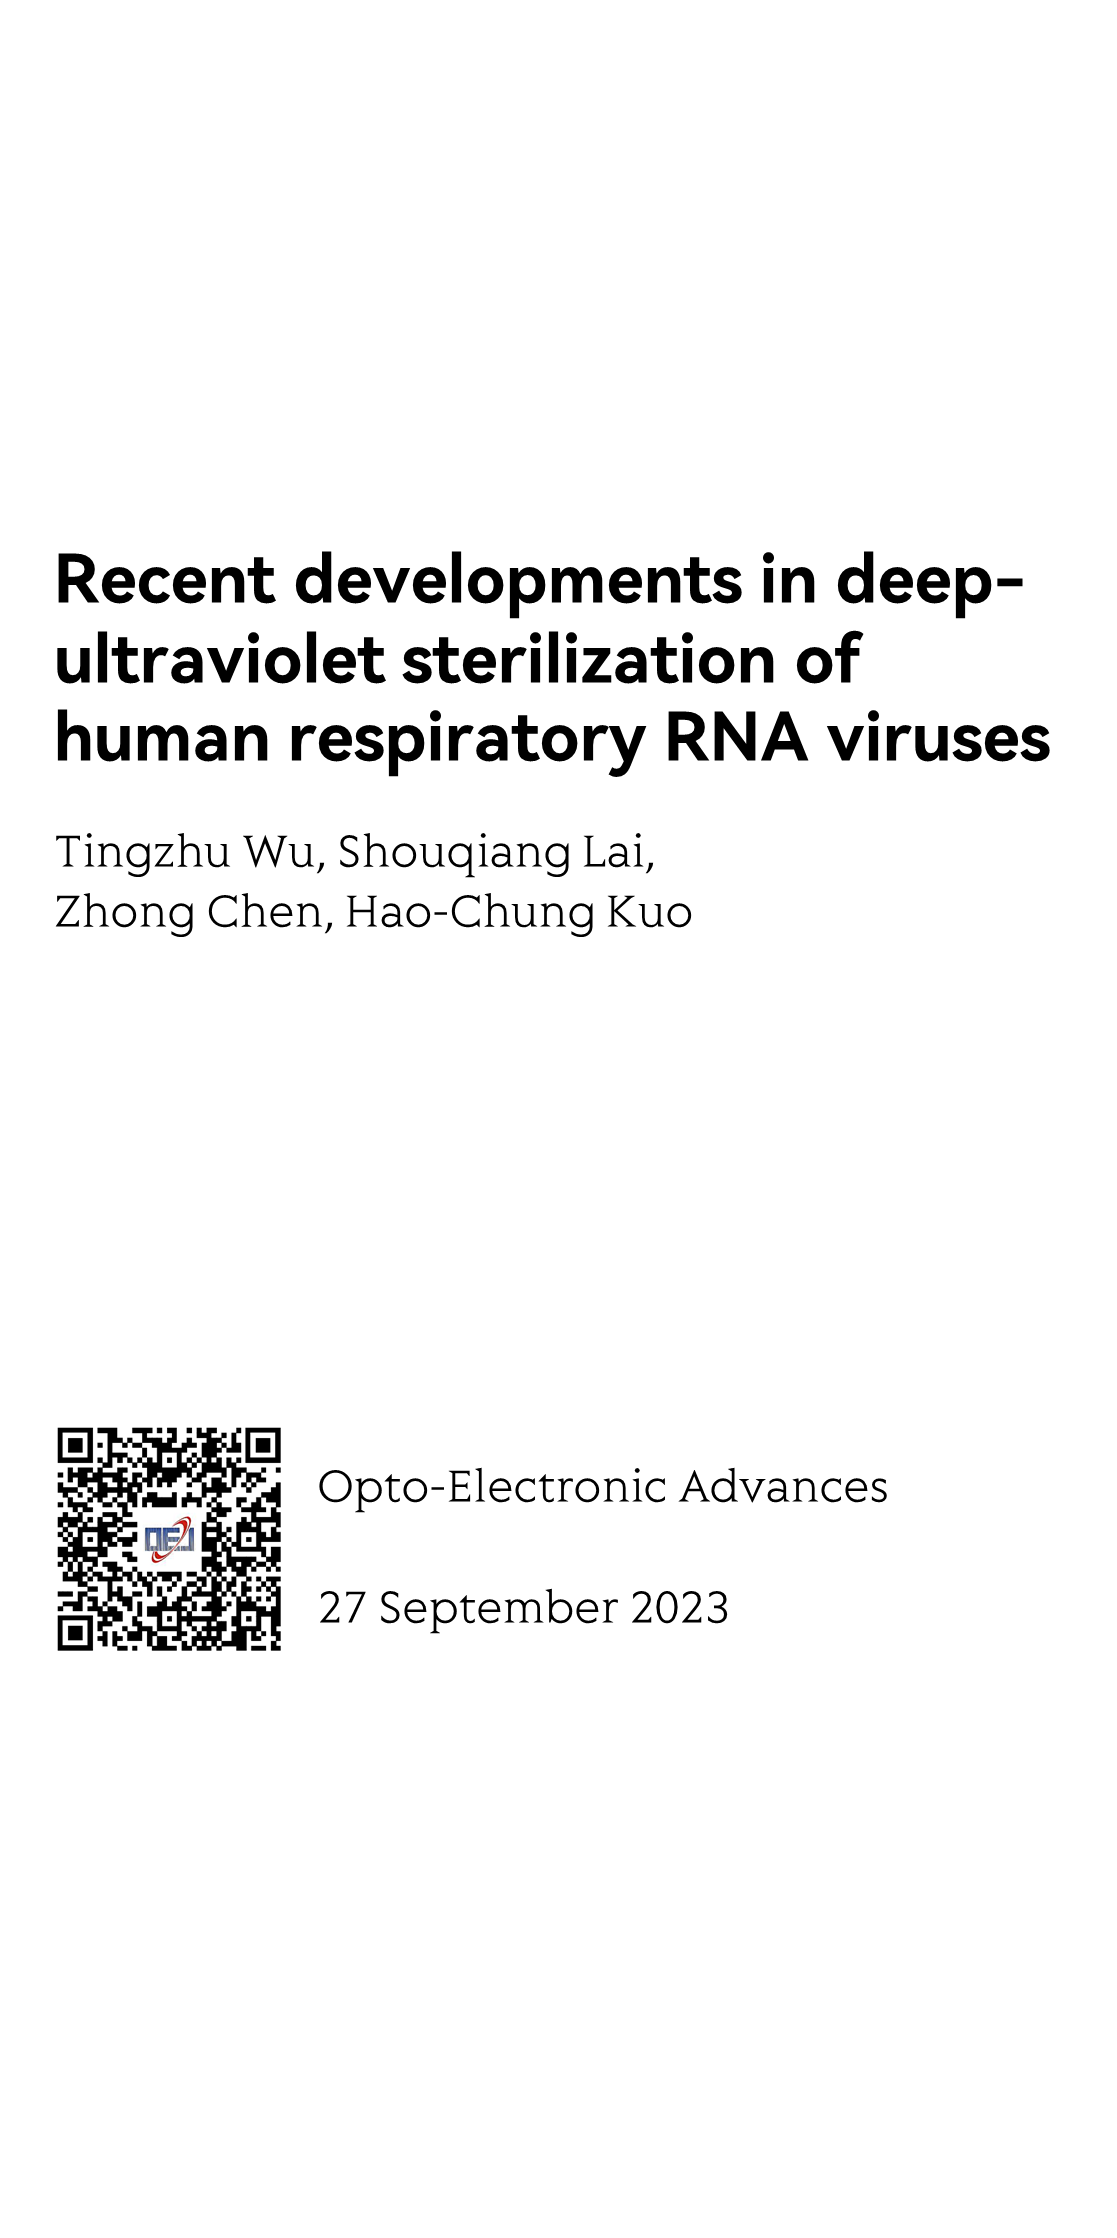 Recent developments in deep-ultraviolet sterilization of human respiratory RNA viruses_1